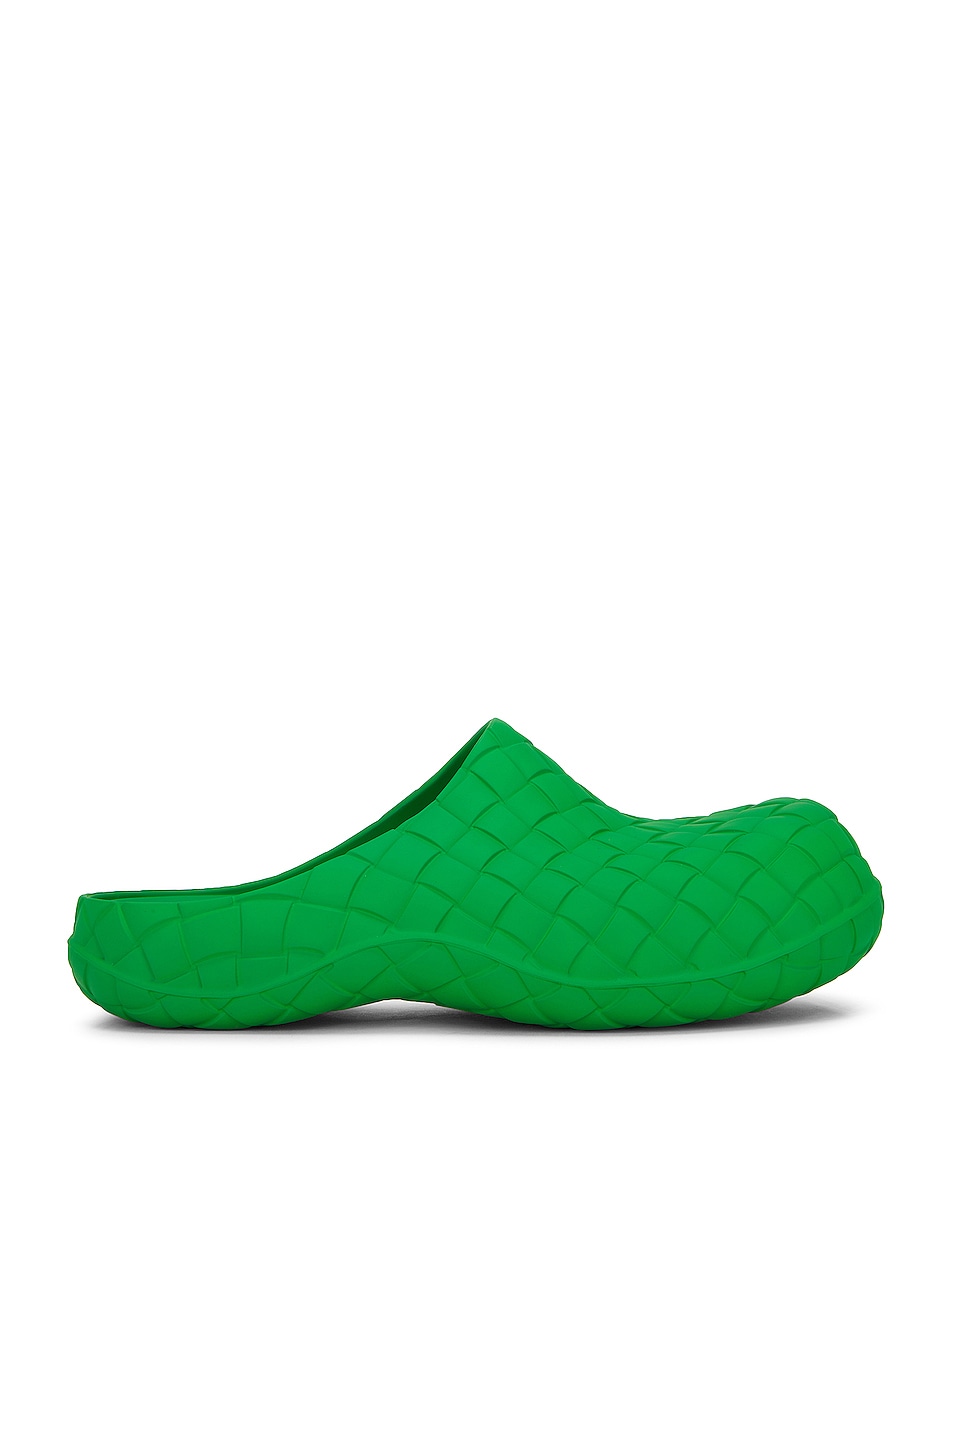 Beebee Clog Sandal in Green